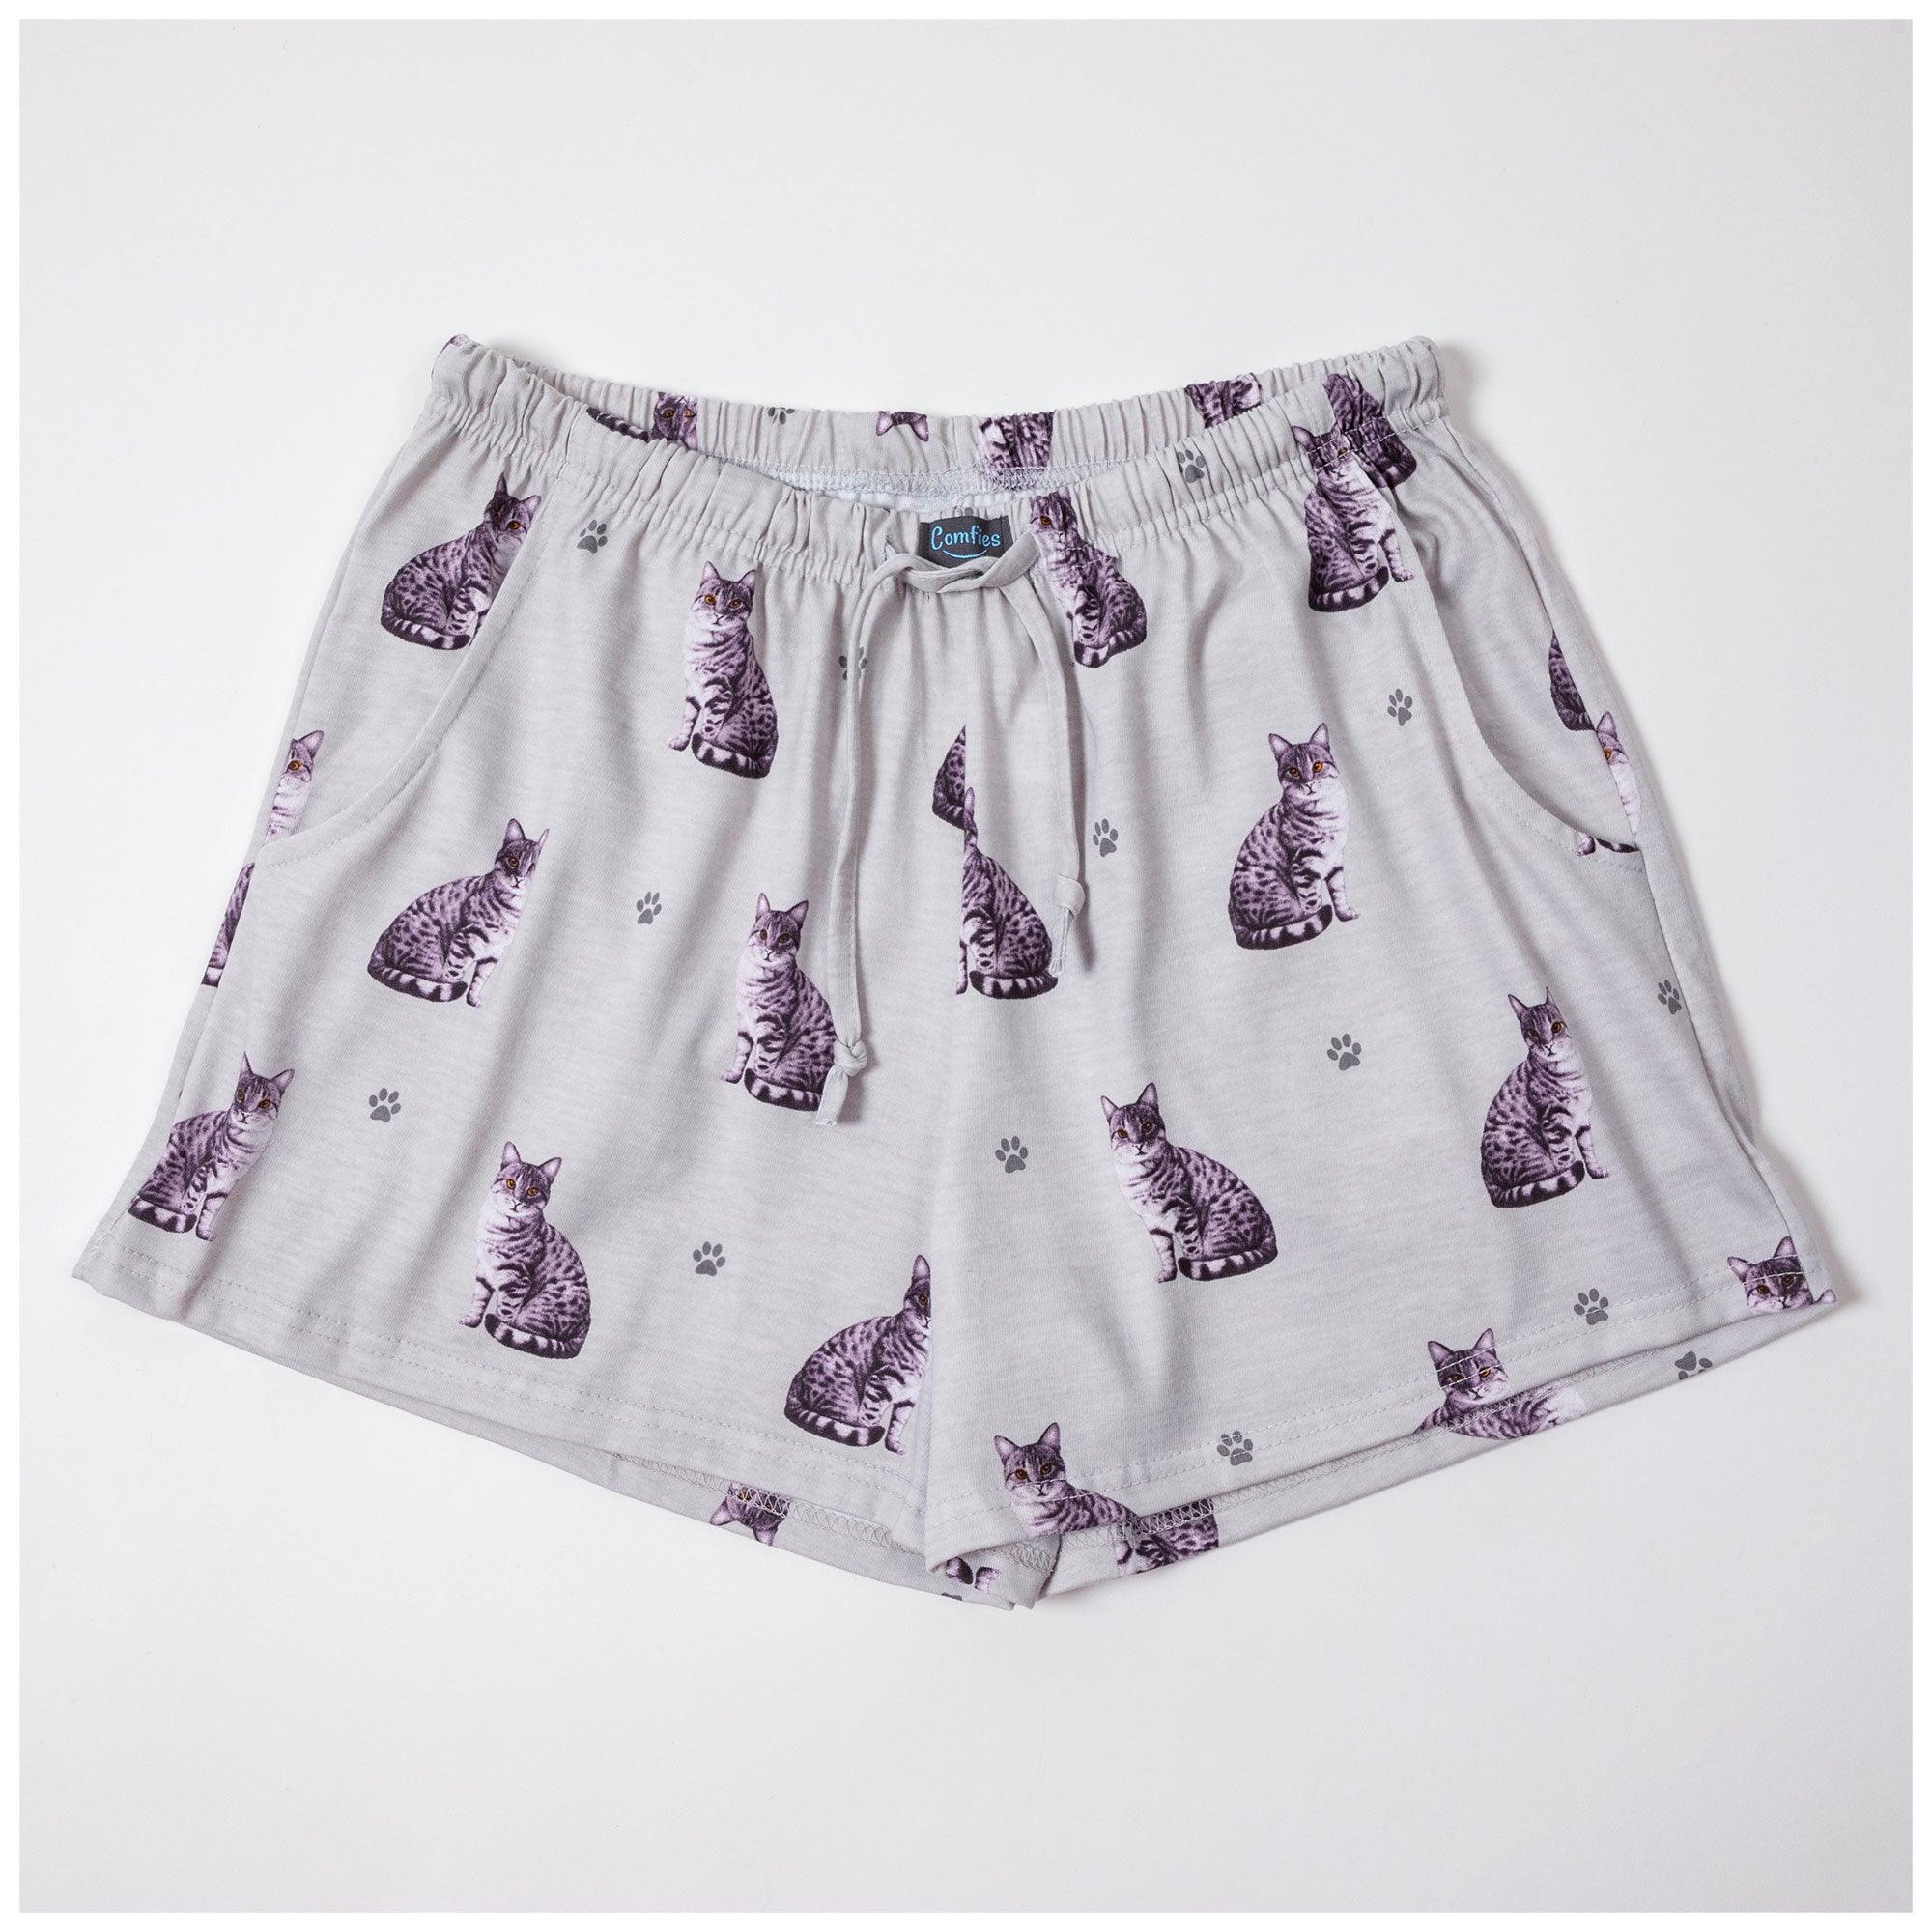 Cute Cat Lounge Shorts - Silver Tabby Cat - XL